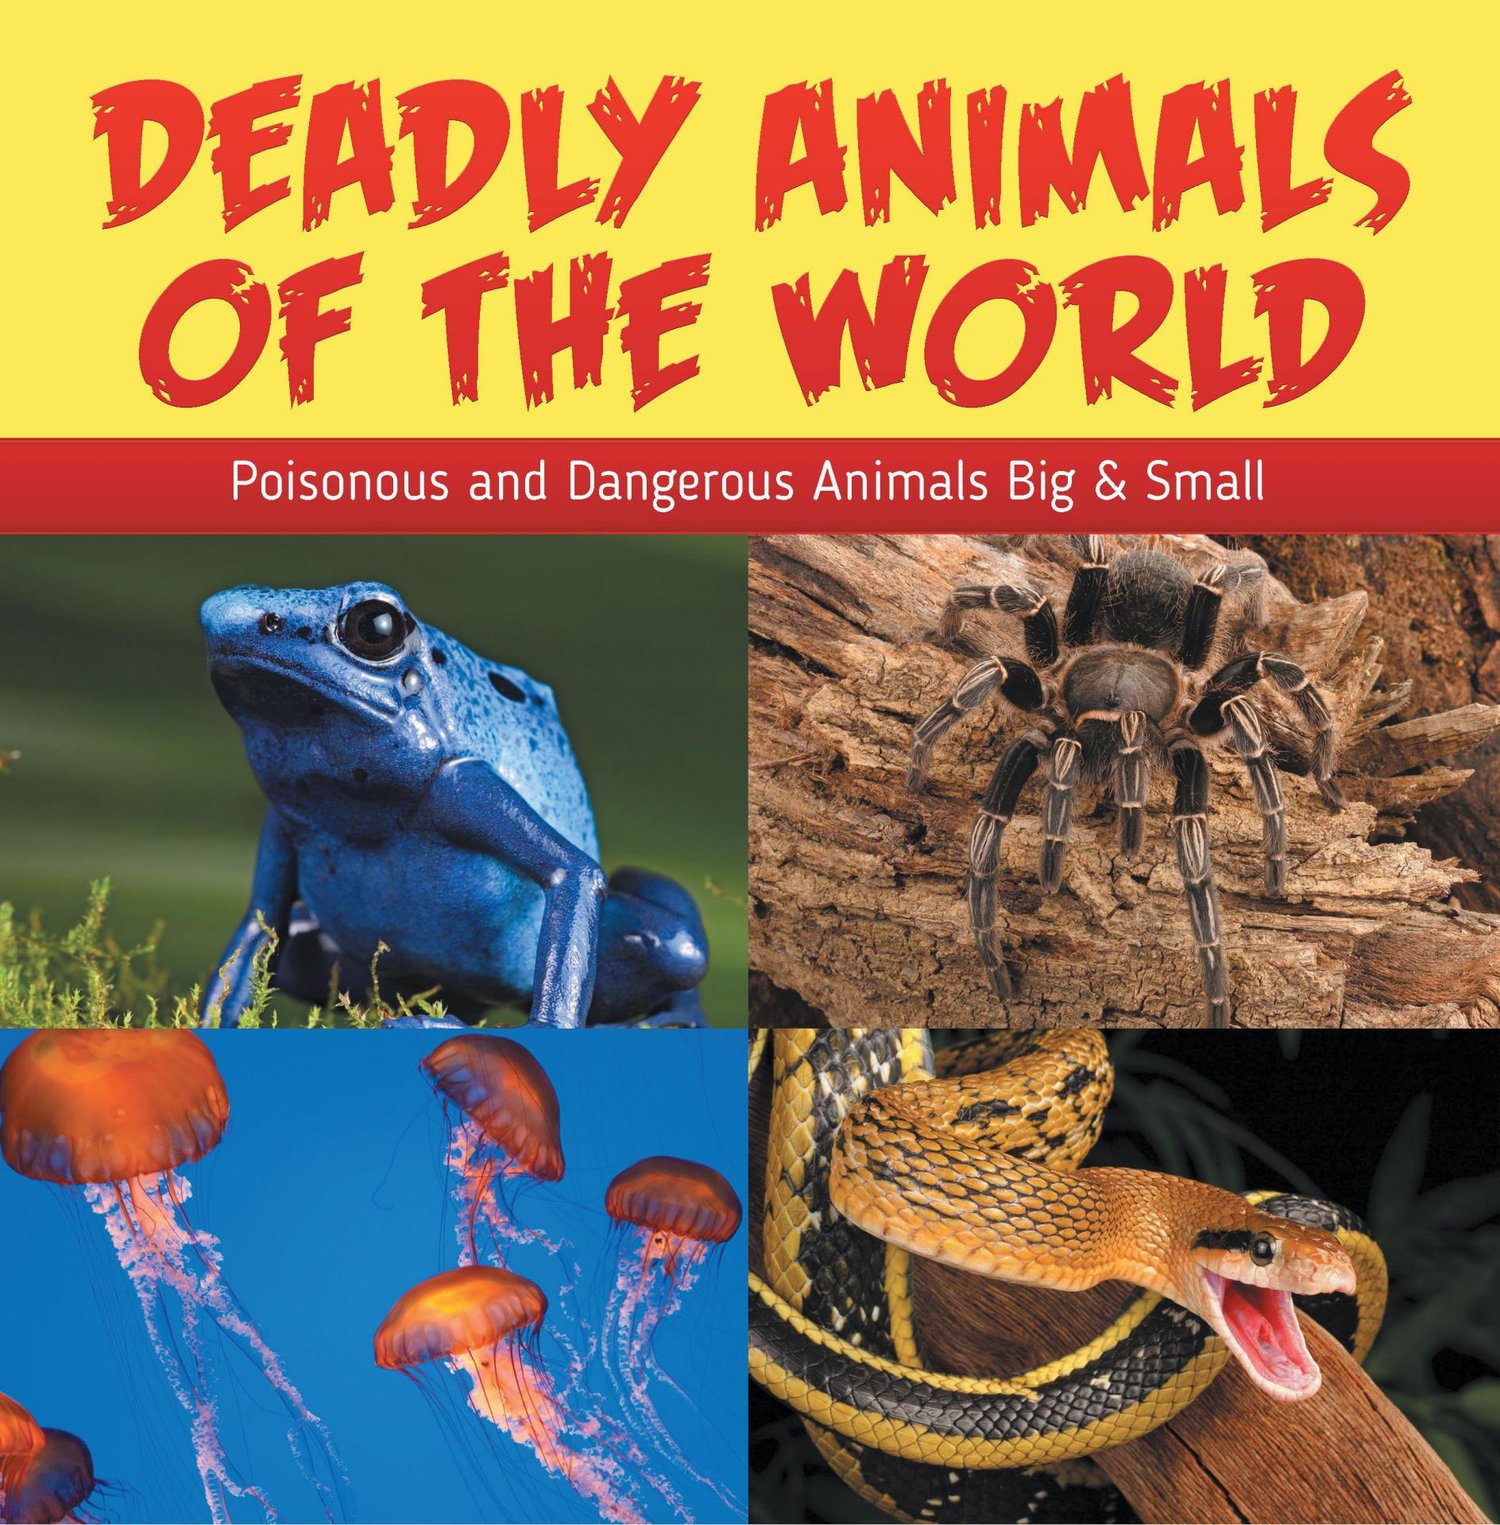 The most dangerous animal. World's Deadliest animals. @ Poisonous World. The most Dangerous animal of all книга. Reading Dangerous animals of the World reading.